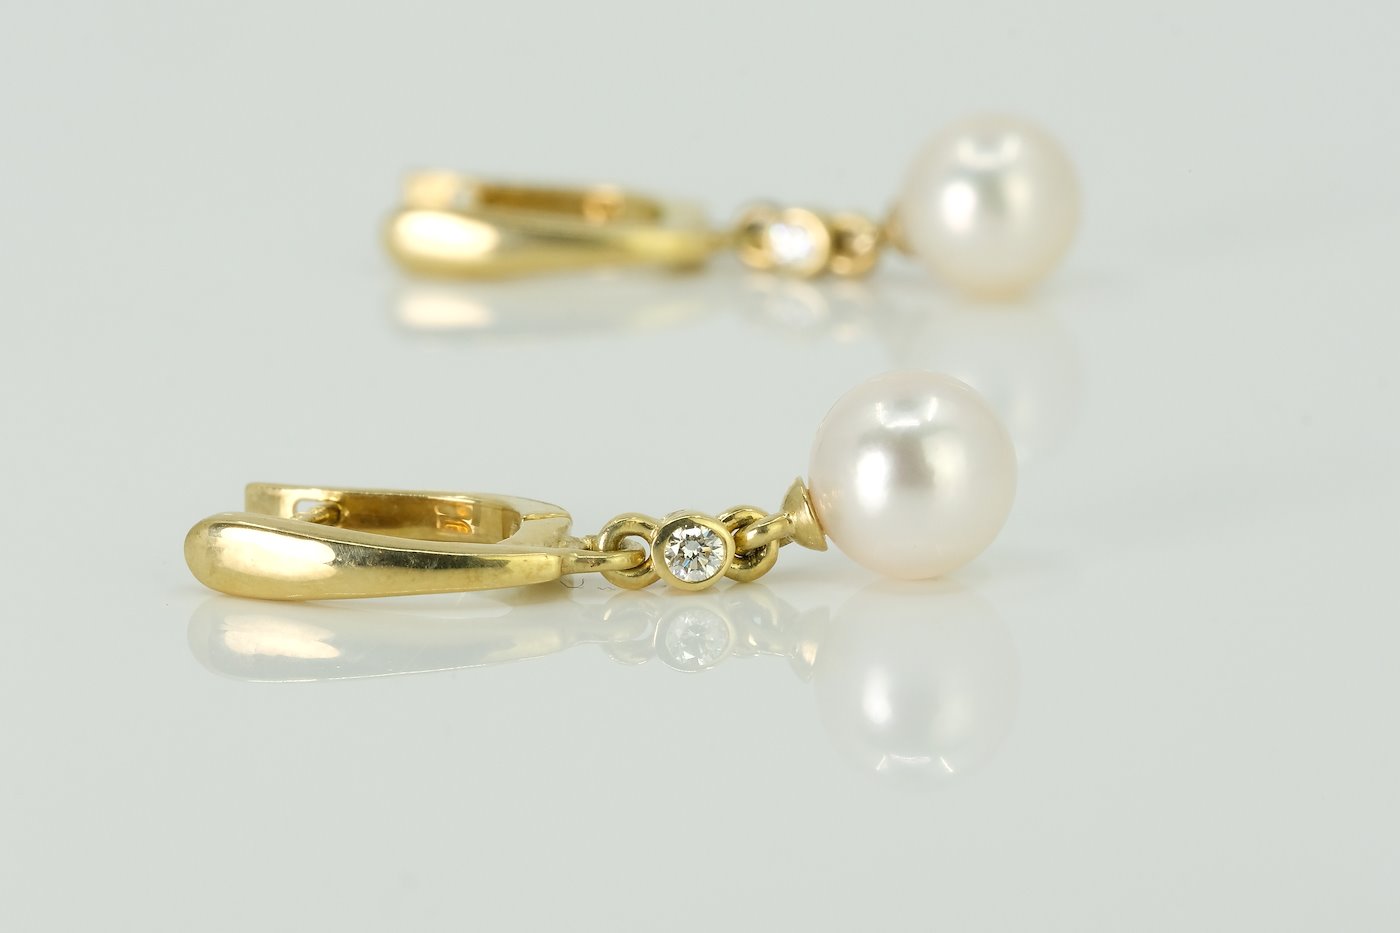 Anton Schwartz - Visací zlaté naušnice s perlami Akoya a diamanty, 2x diamant 0,07 ct, zlato 585/1000, hrubá hmotnost 4,59 g